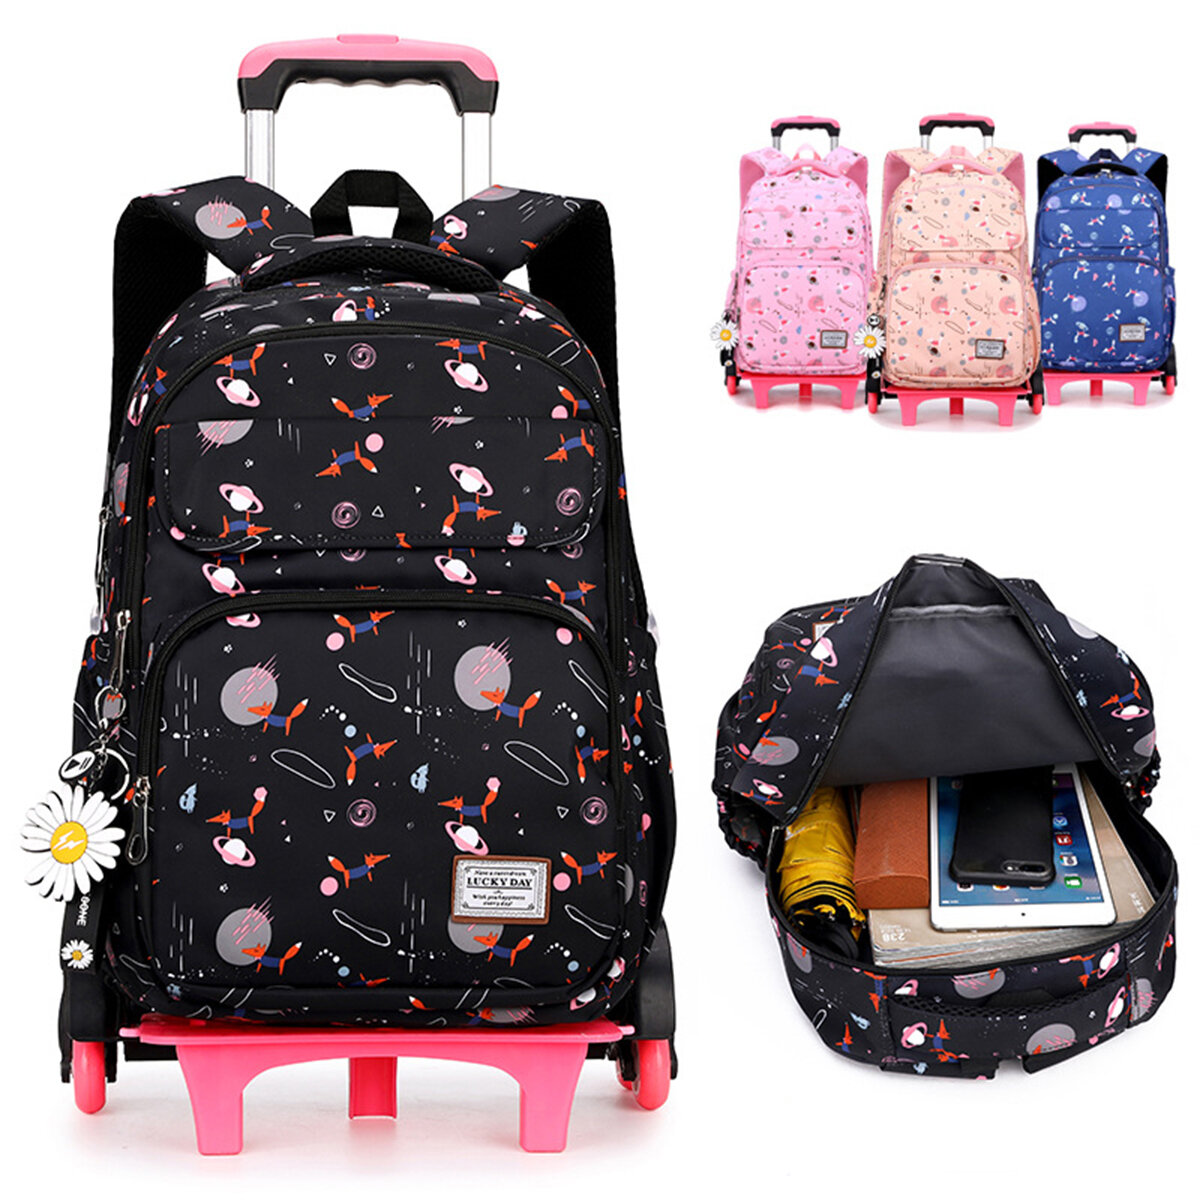 ZIRANYU 2/6 Wheels Kids Travel Trolley Backpack Teenagers Rolling Luggage Backpack School Wheeled Bag for Children